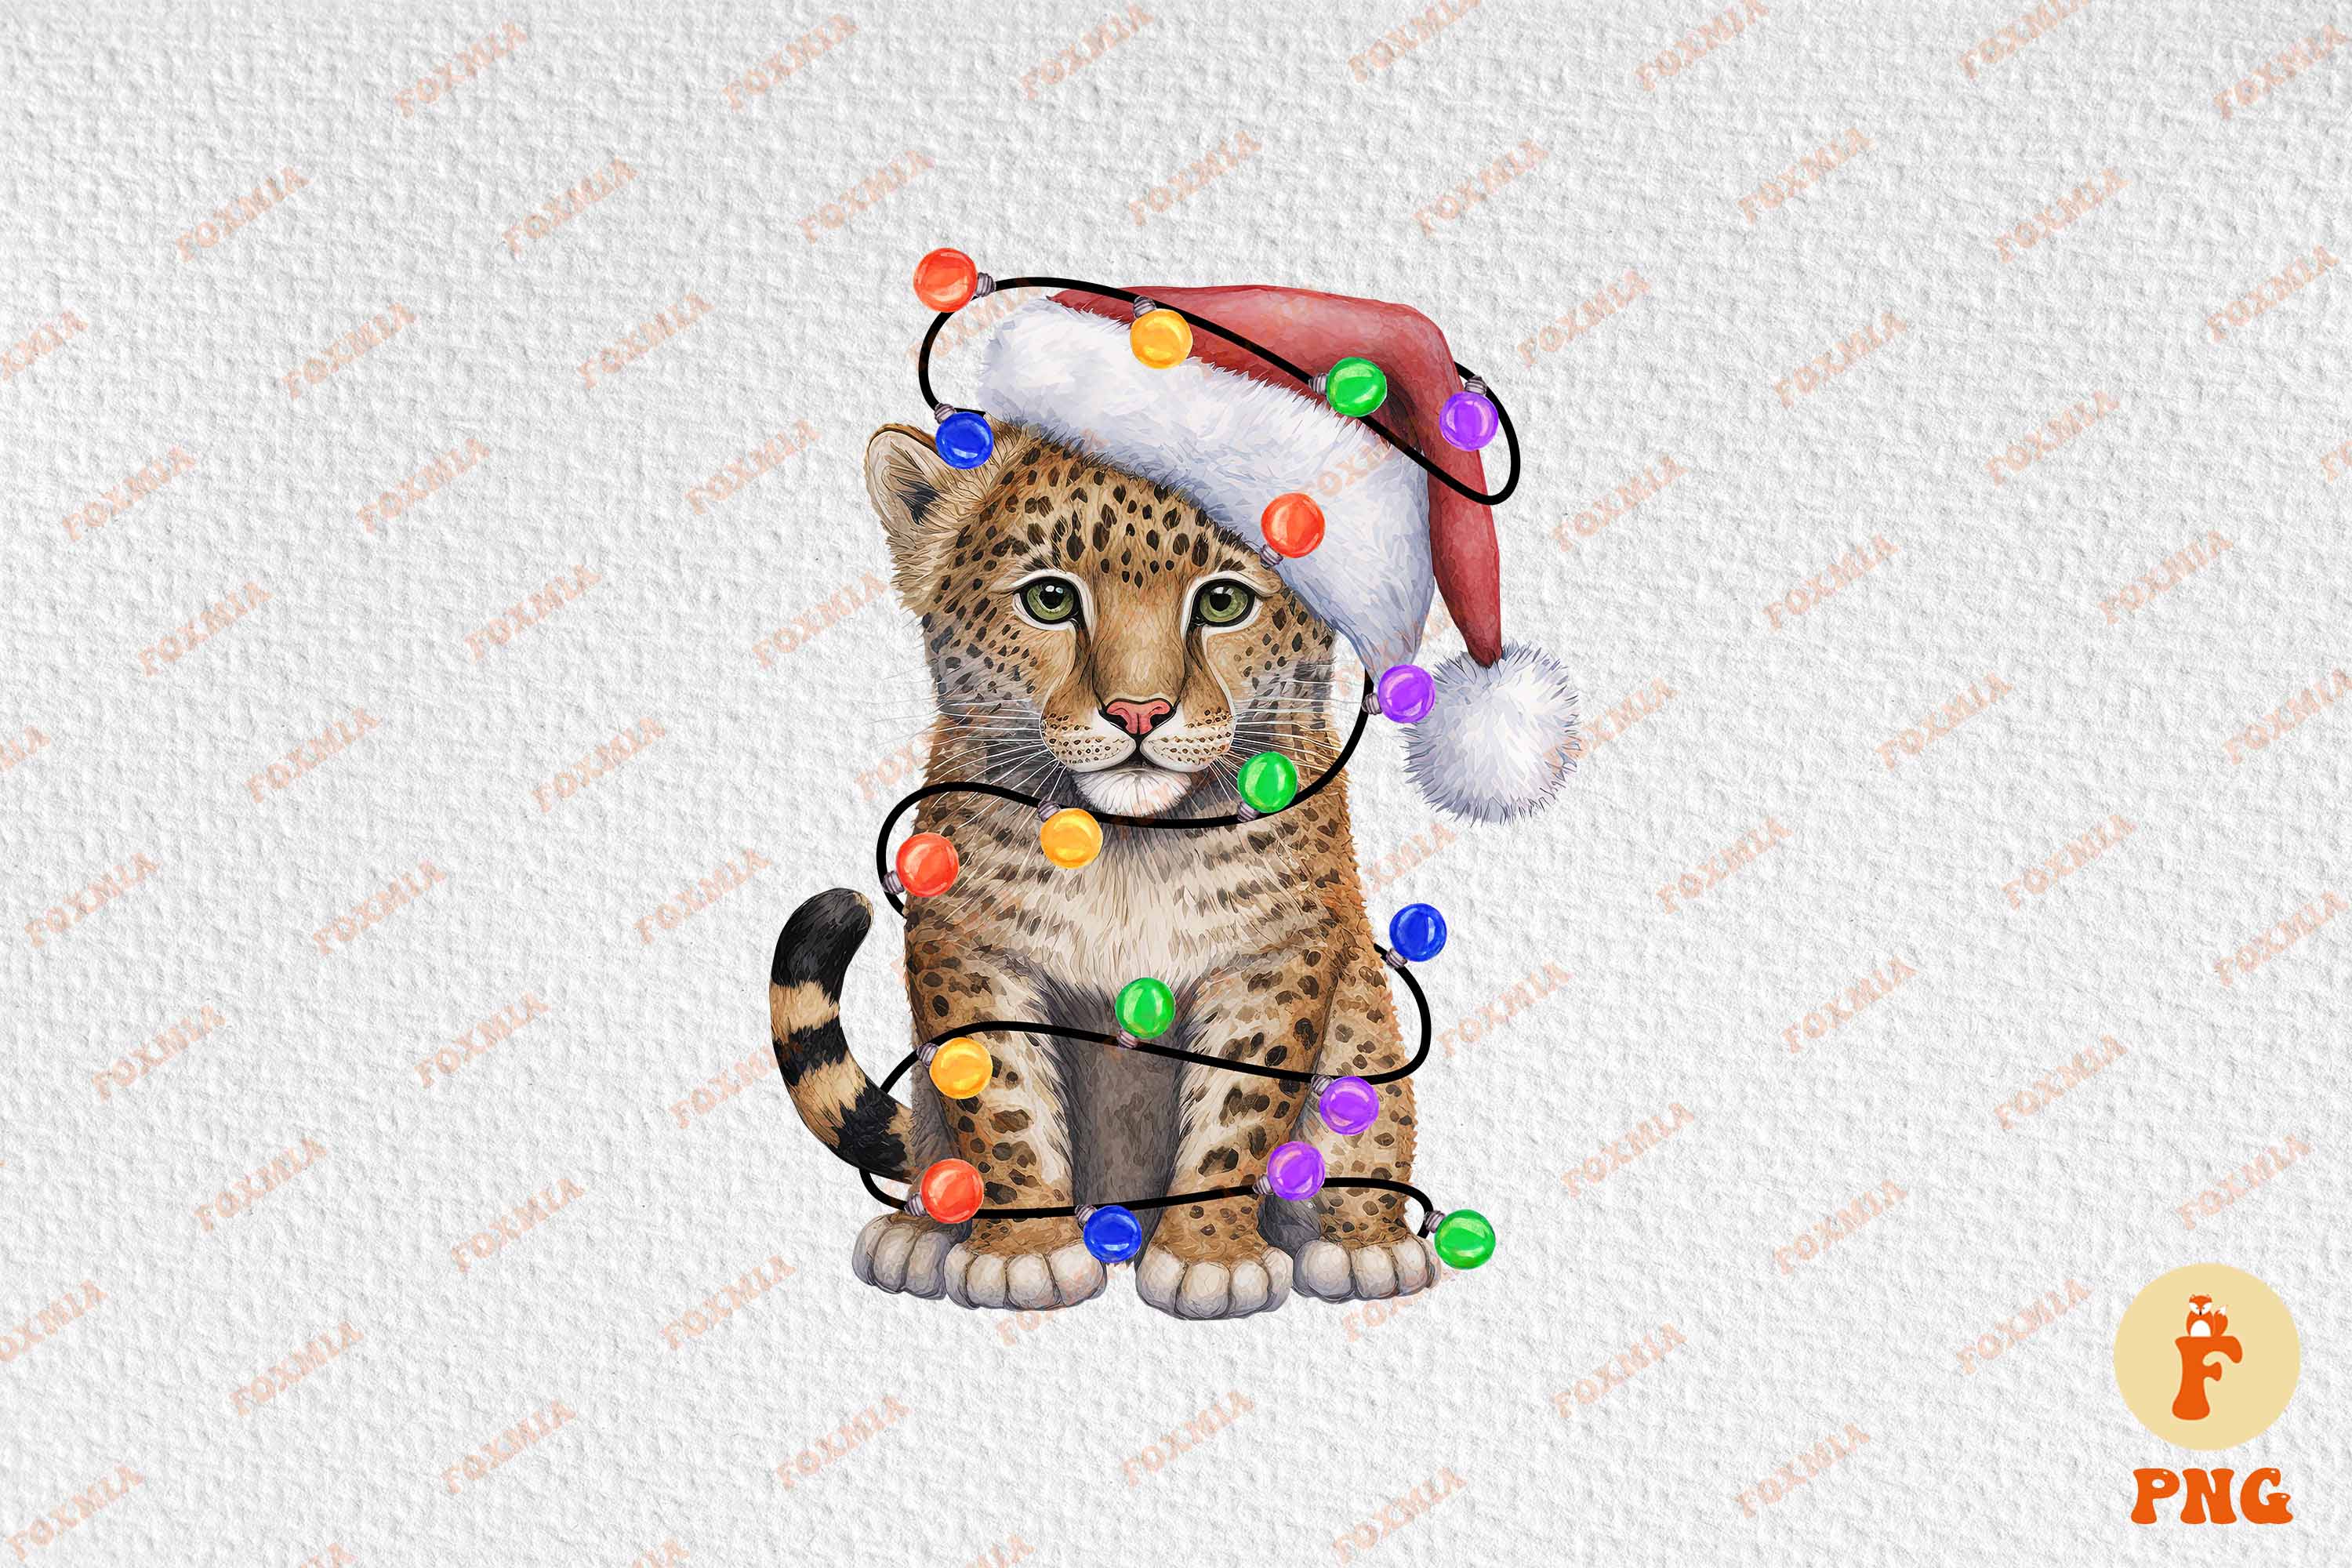 Gorgeous image of a little leopard wearing a santa hat.